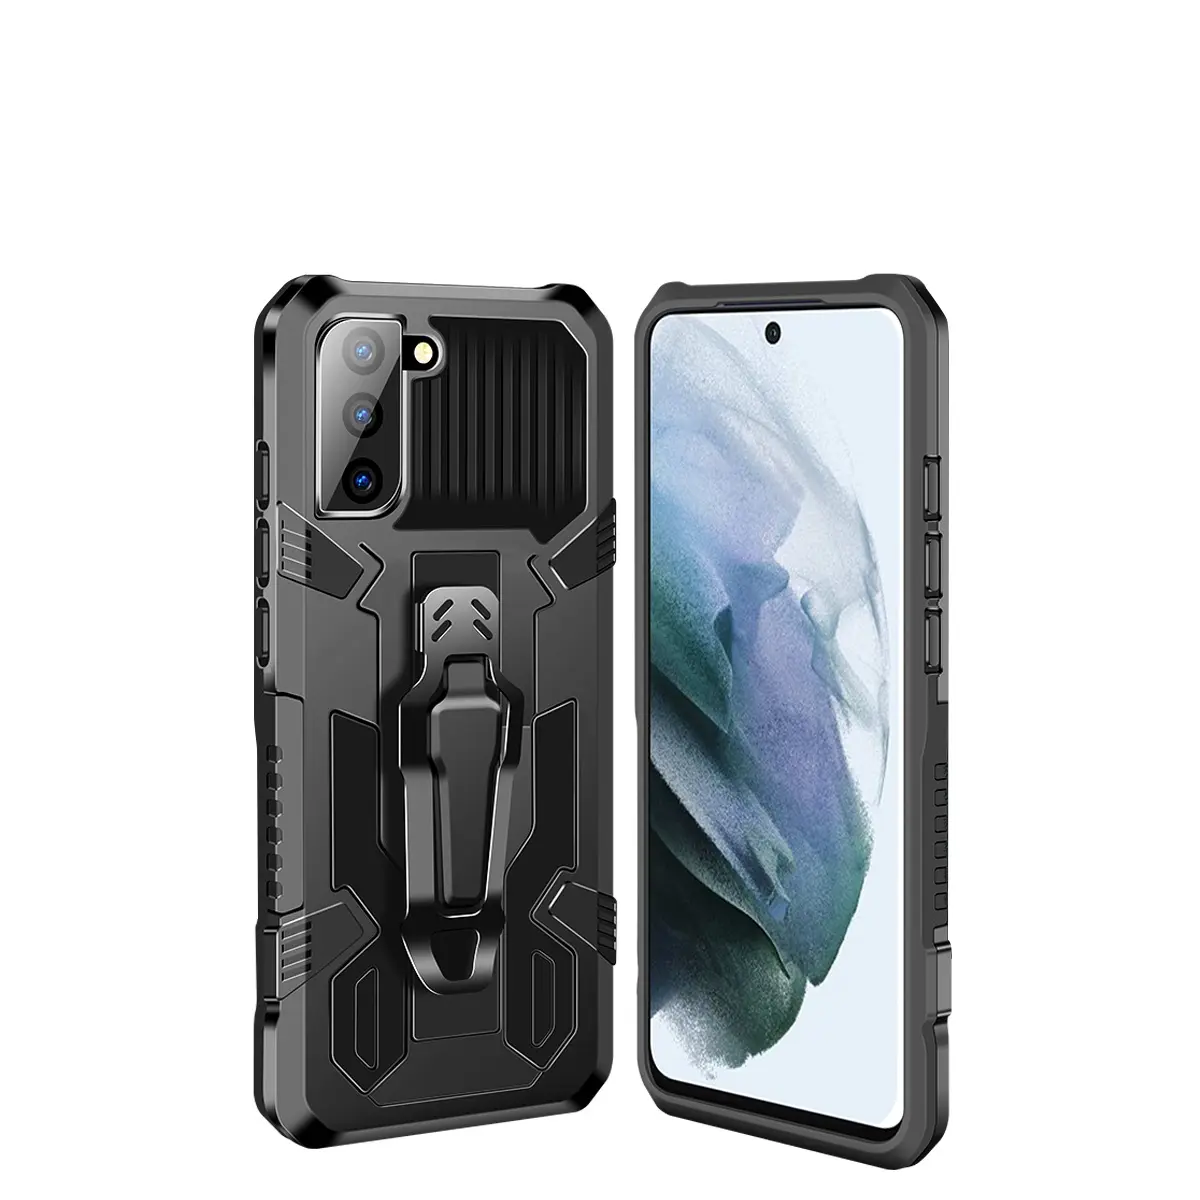 Casing Penyangga Armor Hibrid dengan Klip Magnet Kuat, Casing Ponsel Dudukan Mobil untuk Samsung Galaxy S21 S20 Plus Ultra FE